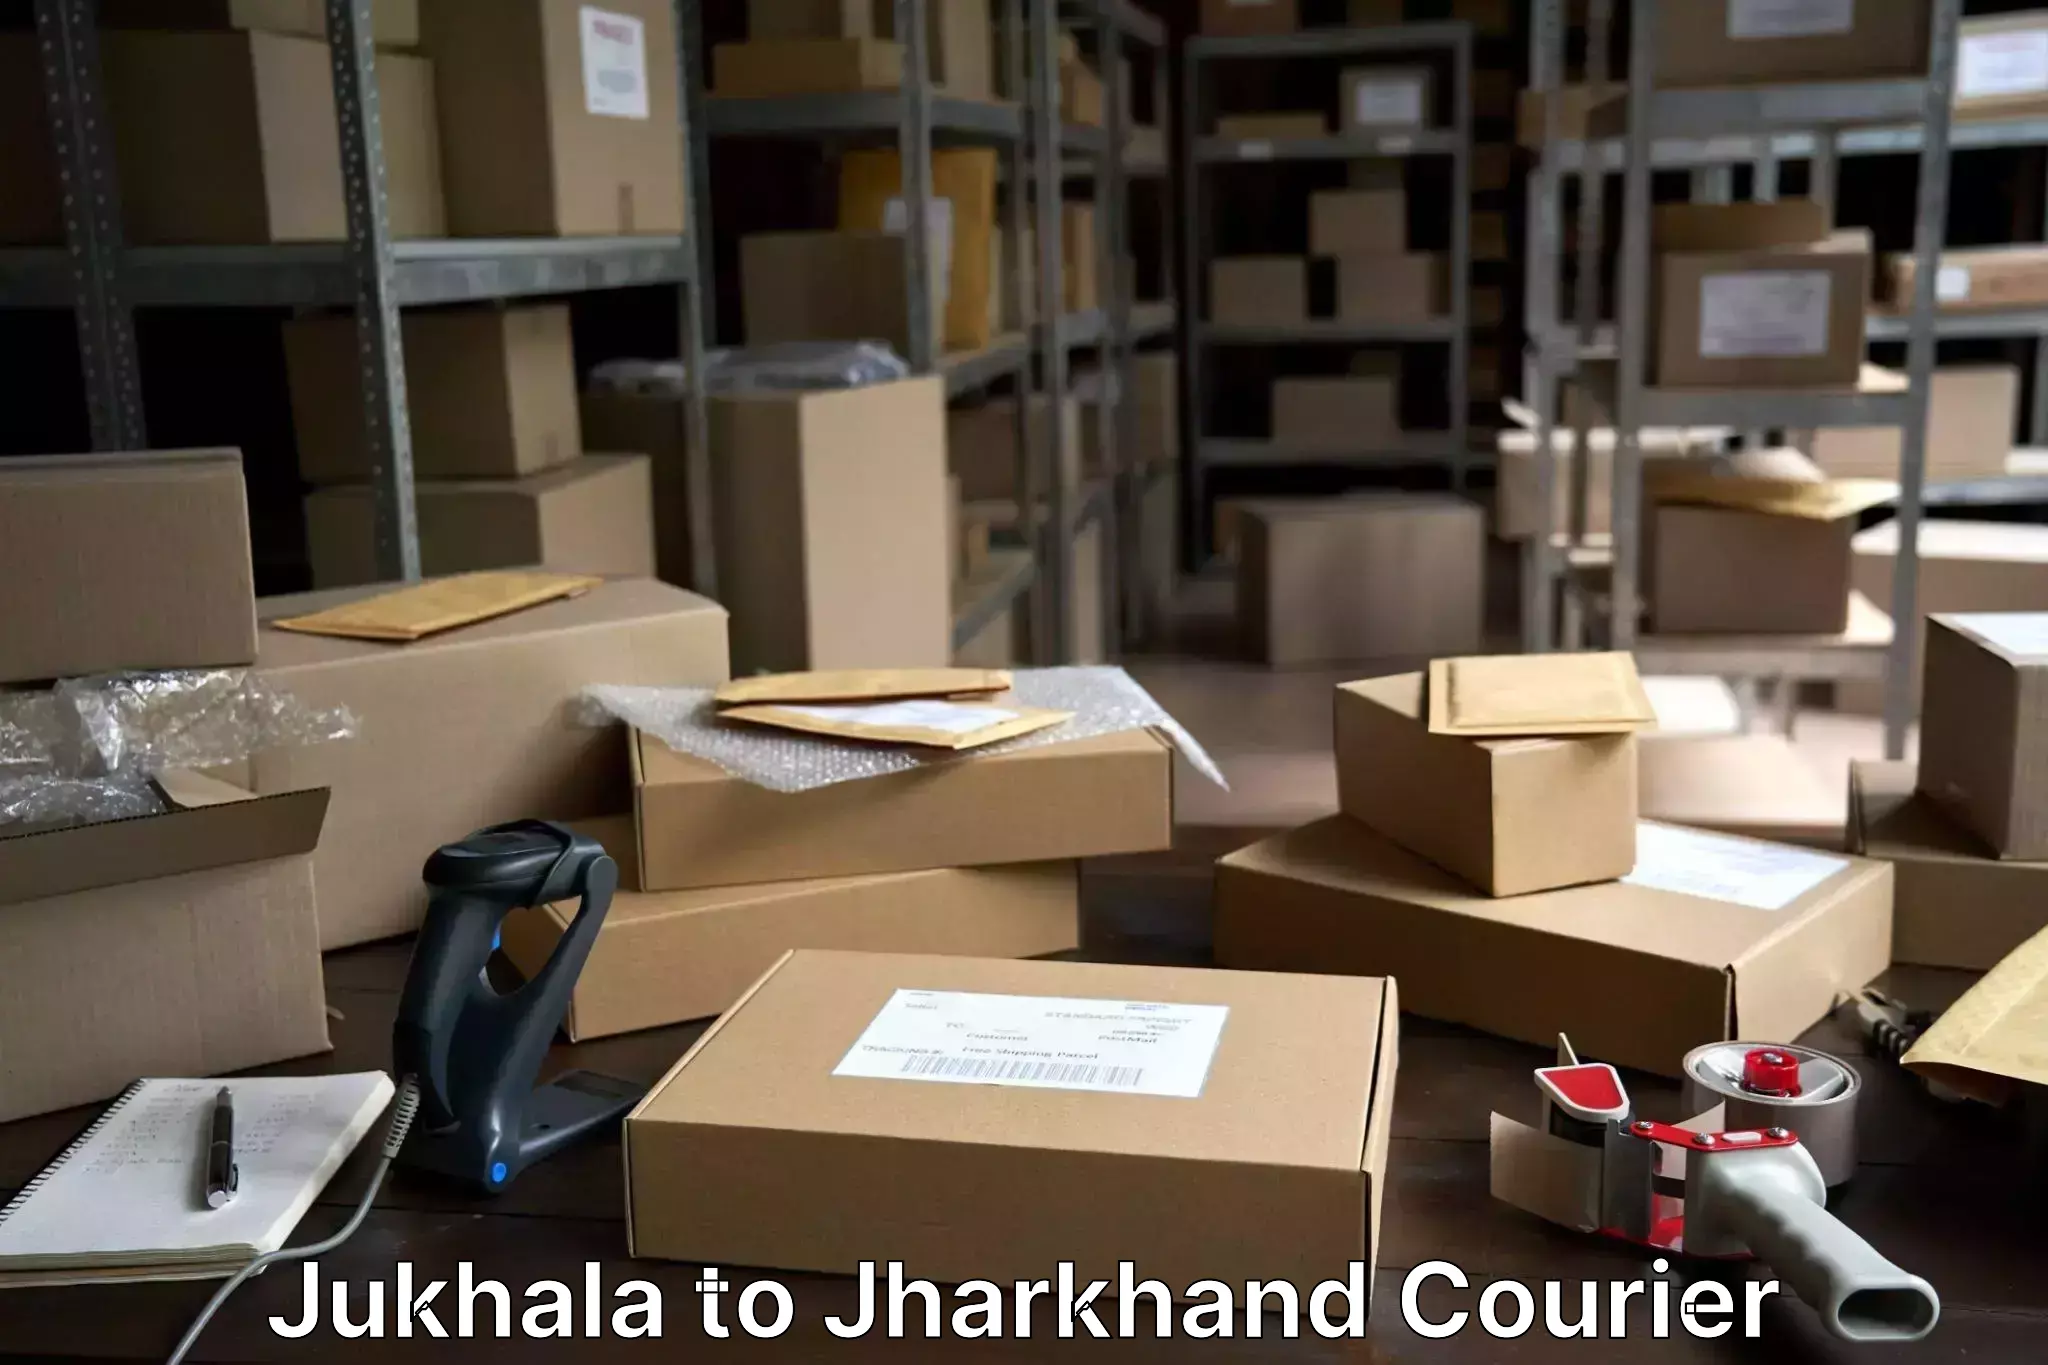 Luggage shipment specialists Jukhala to Bundu